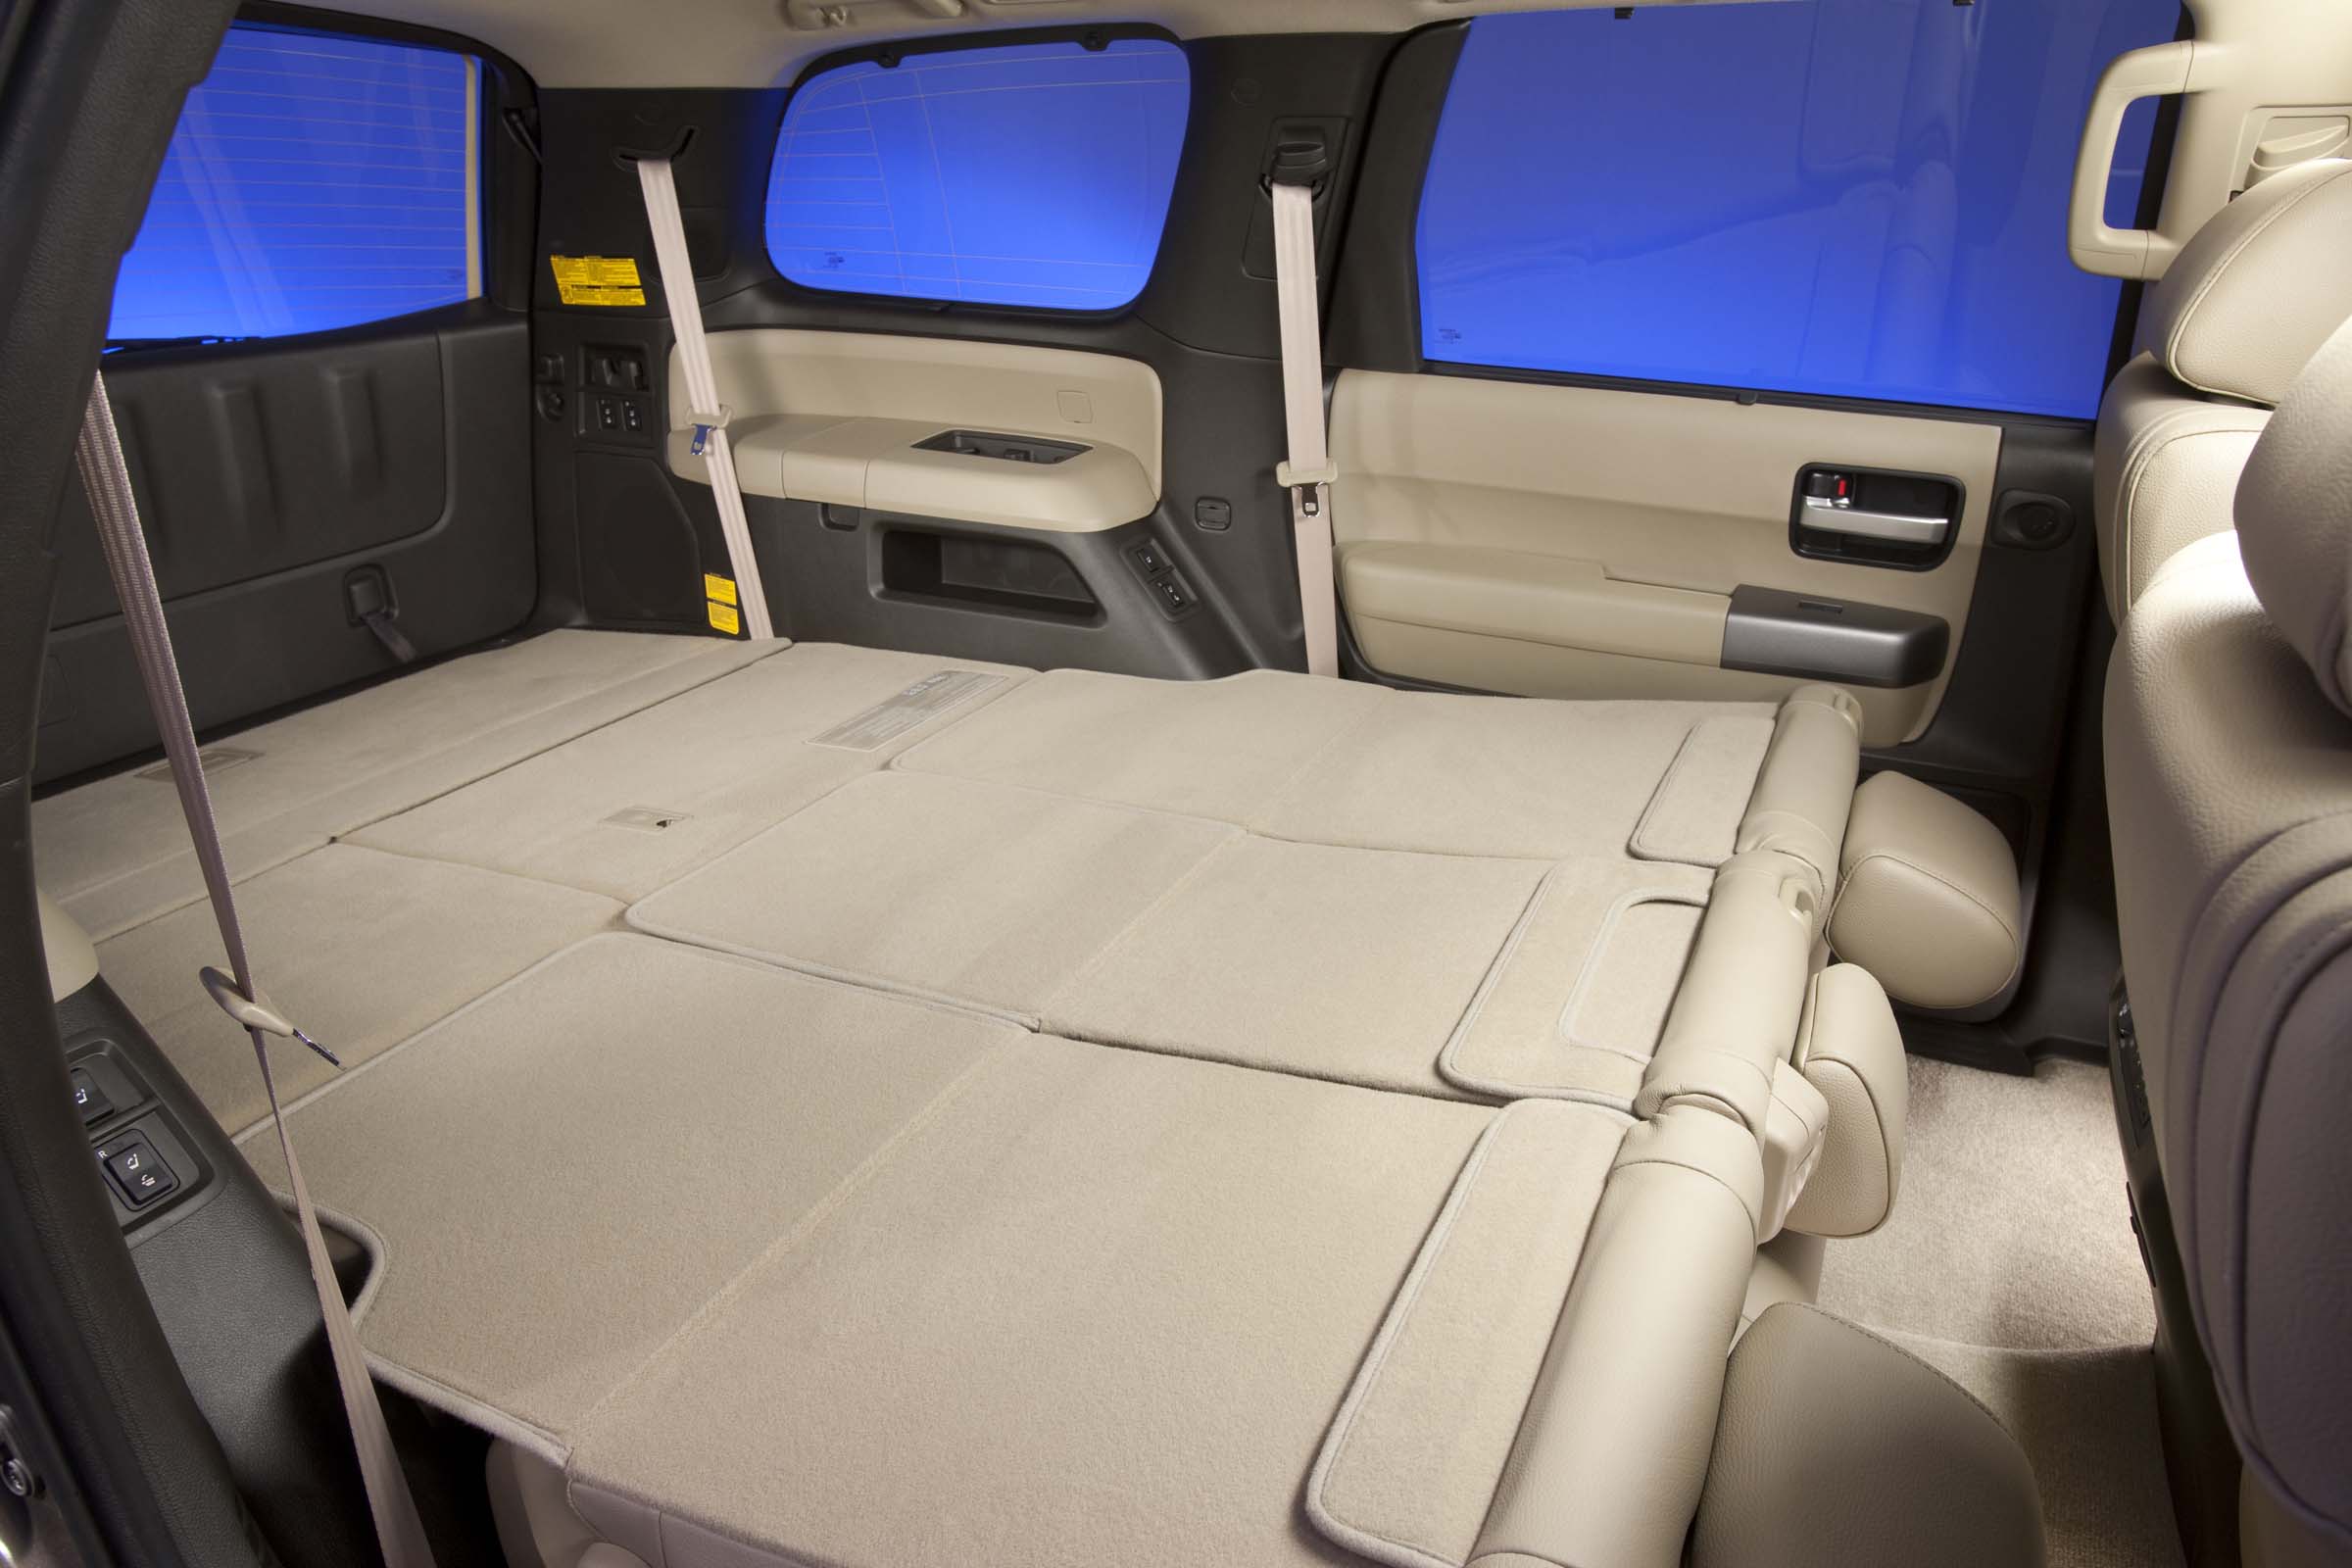 2015 Toyota Sequoia fold flat seats